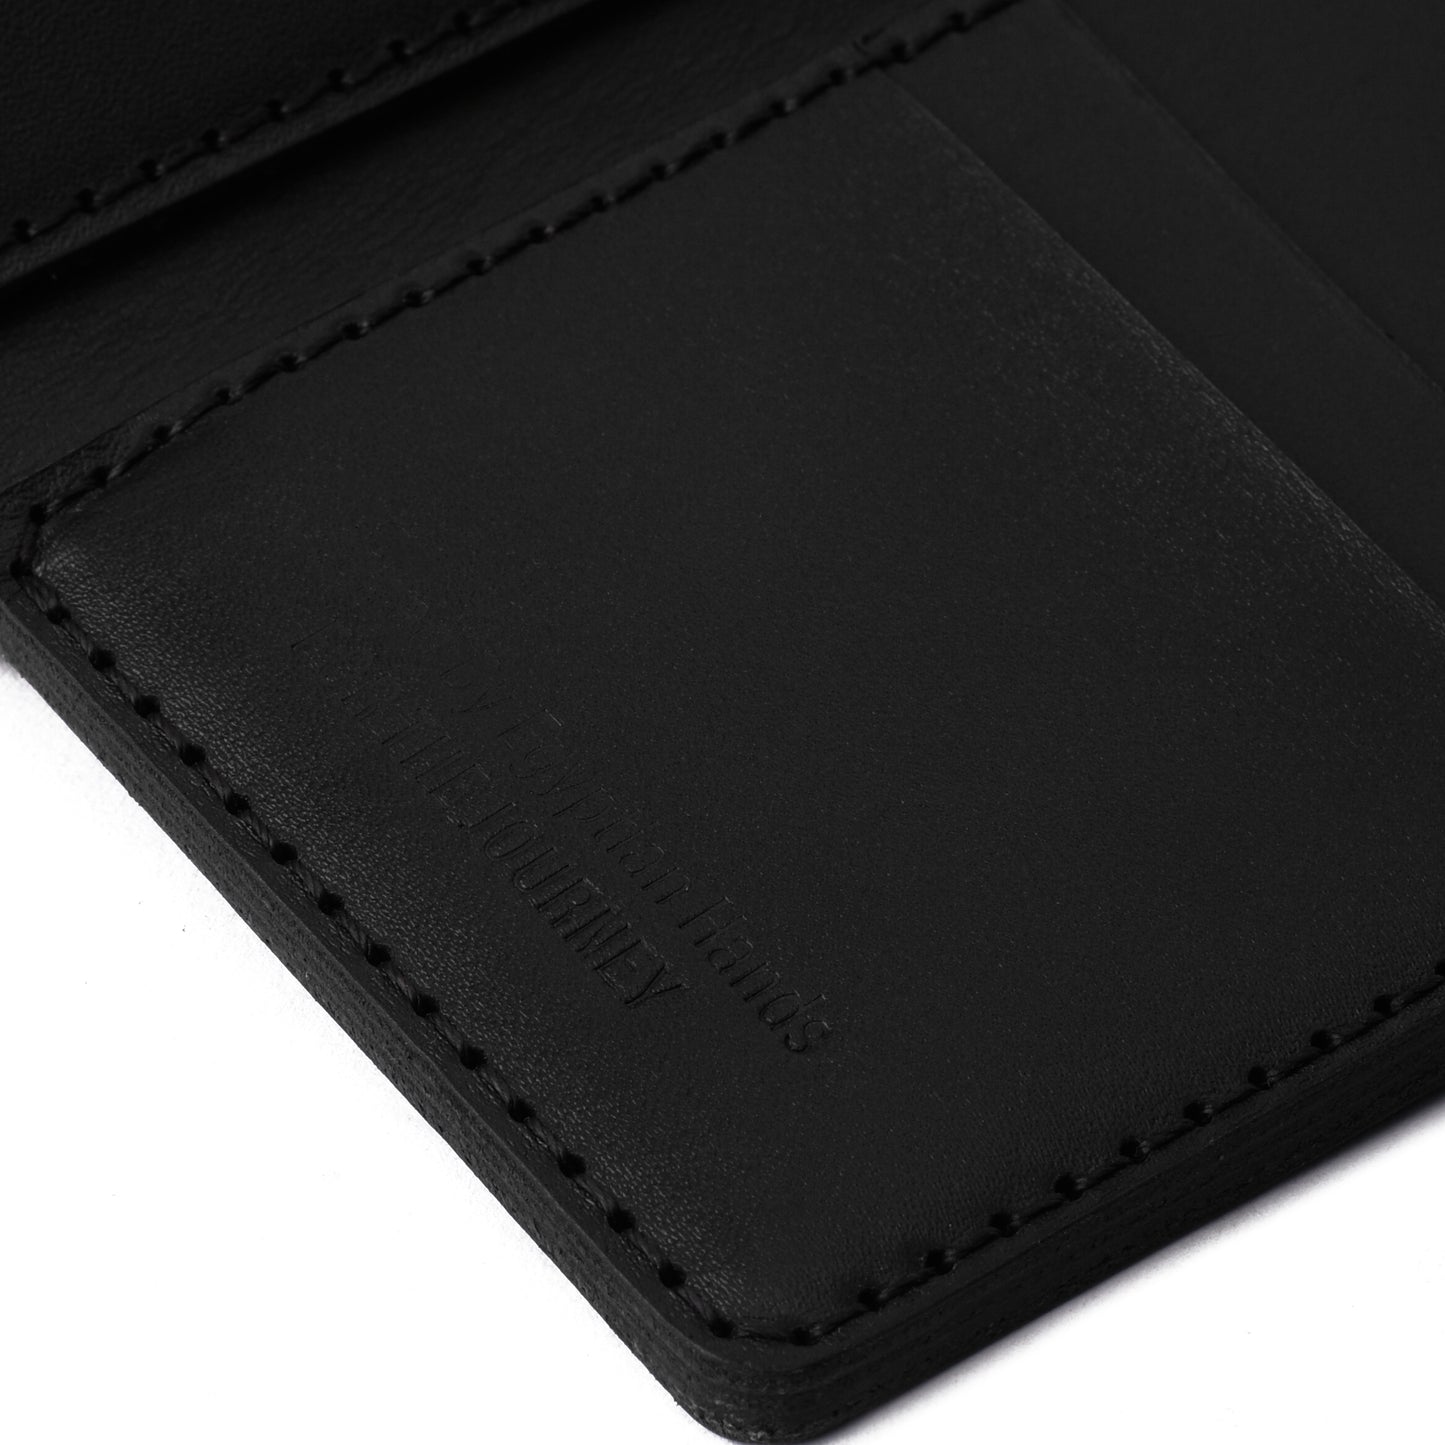 Slim black leather wallet